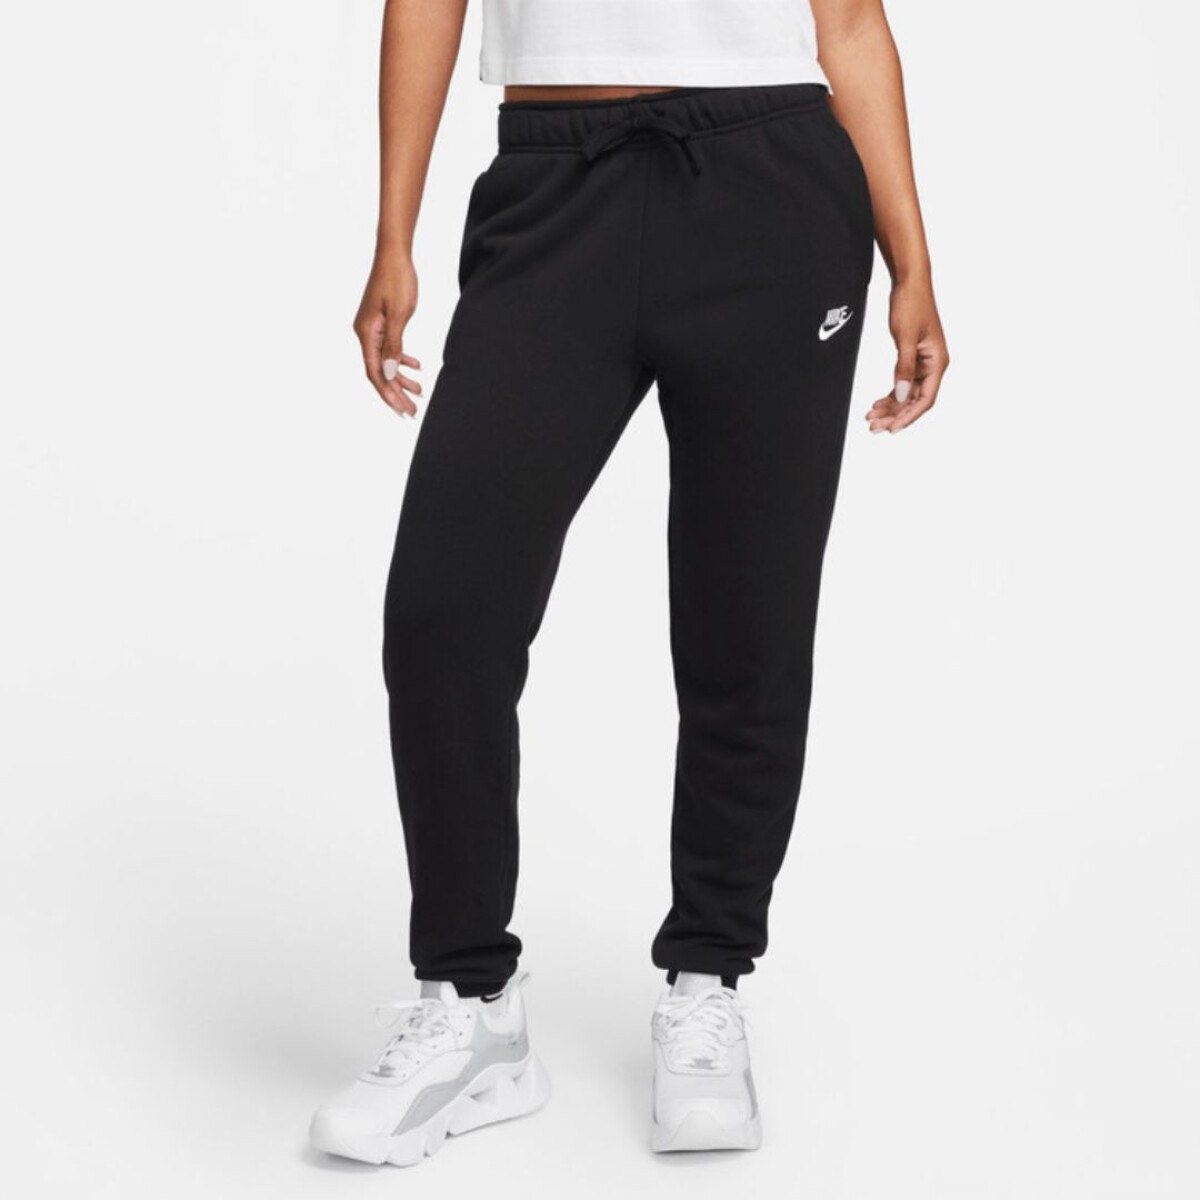 Pantalon Nike Moda Dama Club Flc MR STD Black - S/C 